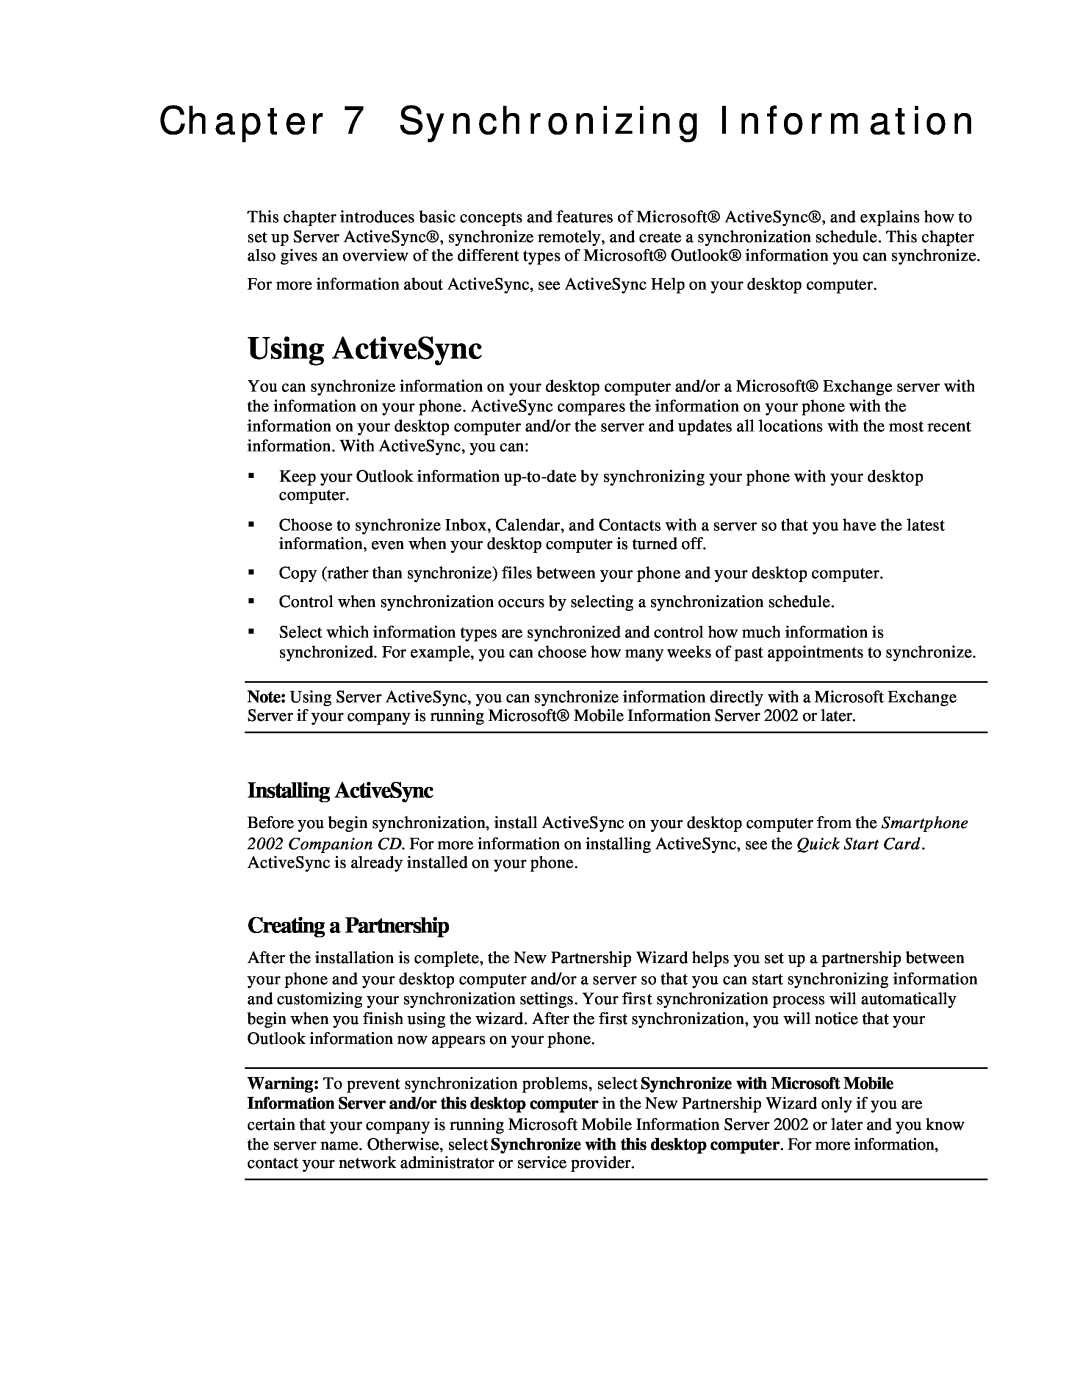 Microsoft Smartphone 2002 manual Synchronizing Information, Using ActiveSync, Creating a Partnership, Installing ActiveSync 